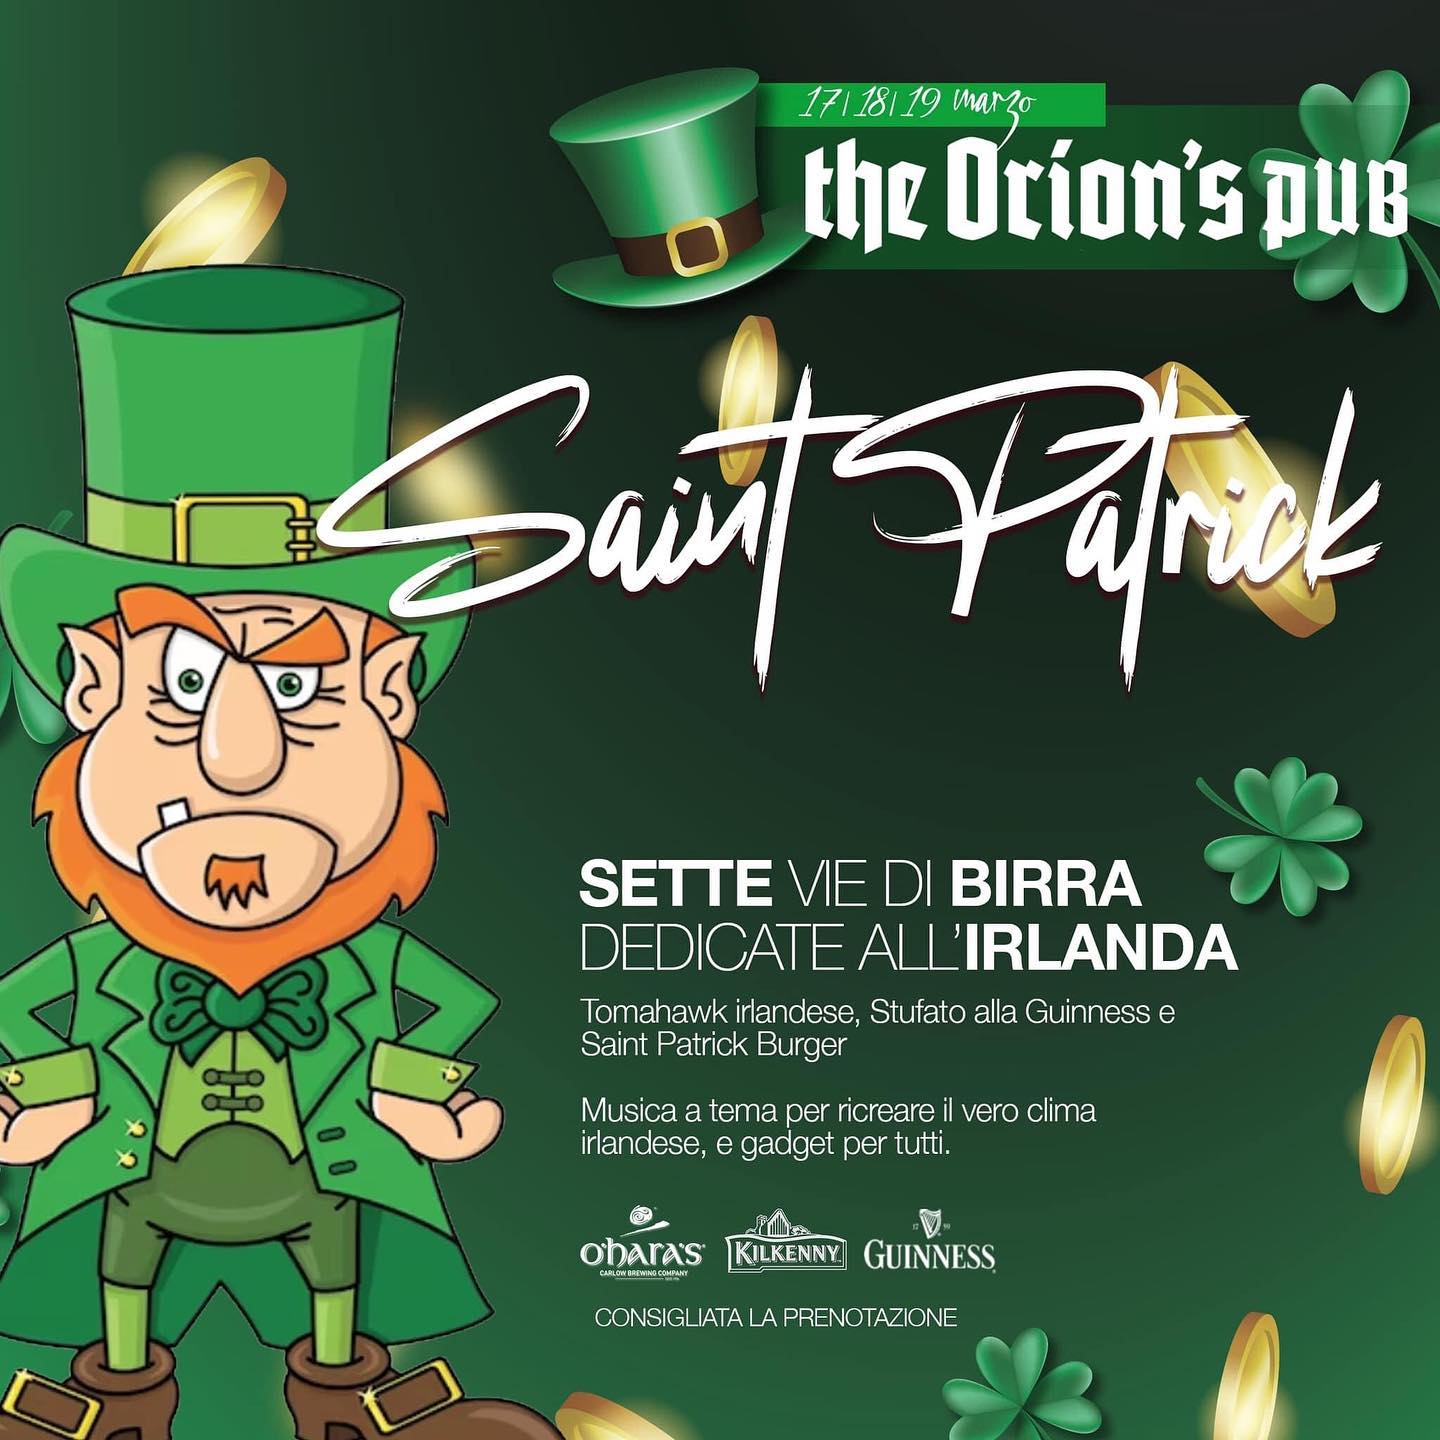 Saint Patrick Days, The Orion, Pub , Beer BQ, Sevegliano, Udine